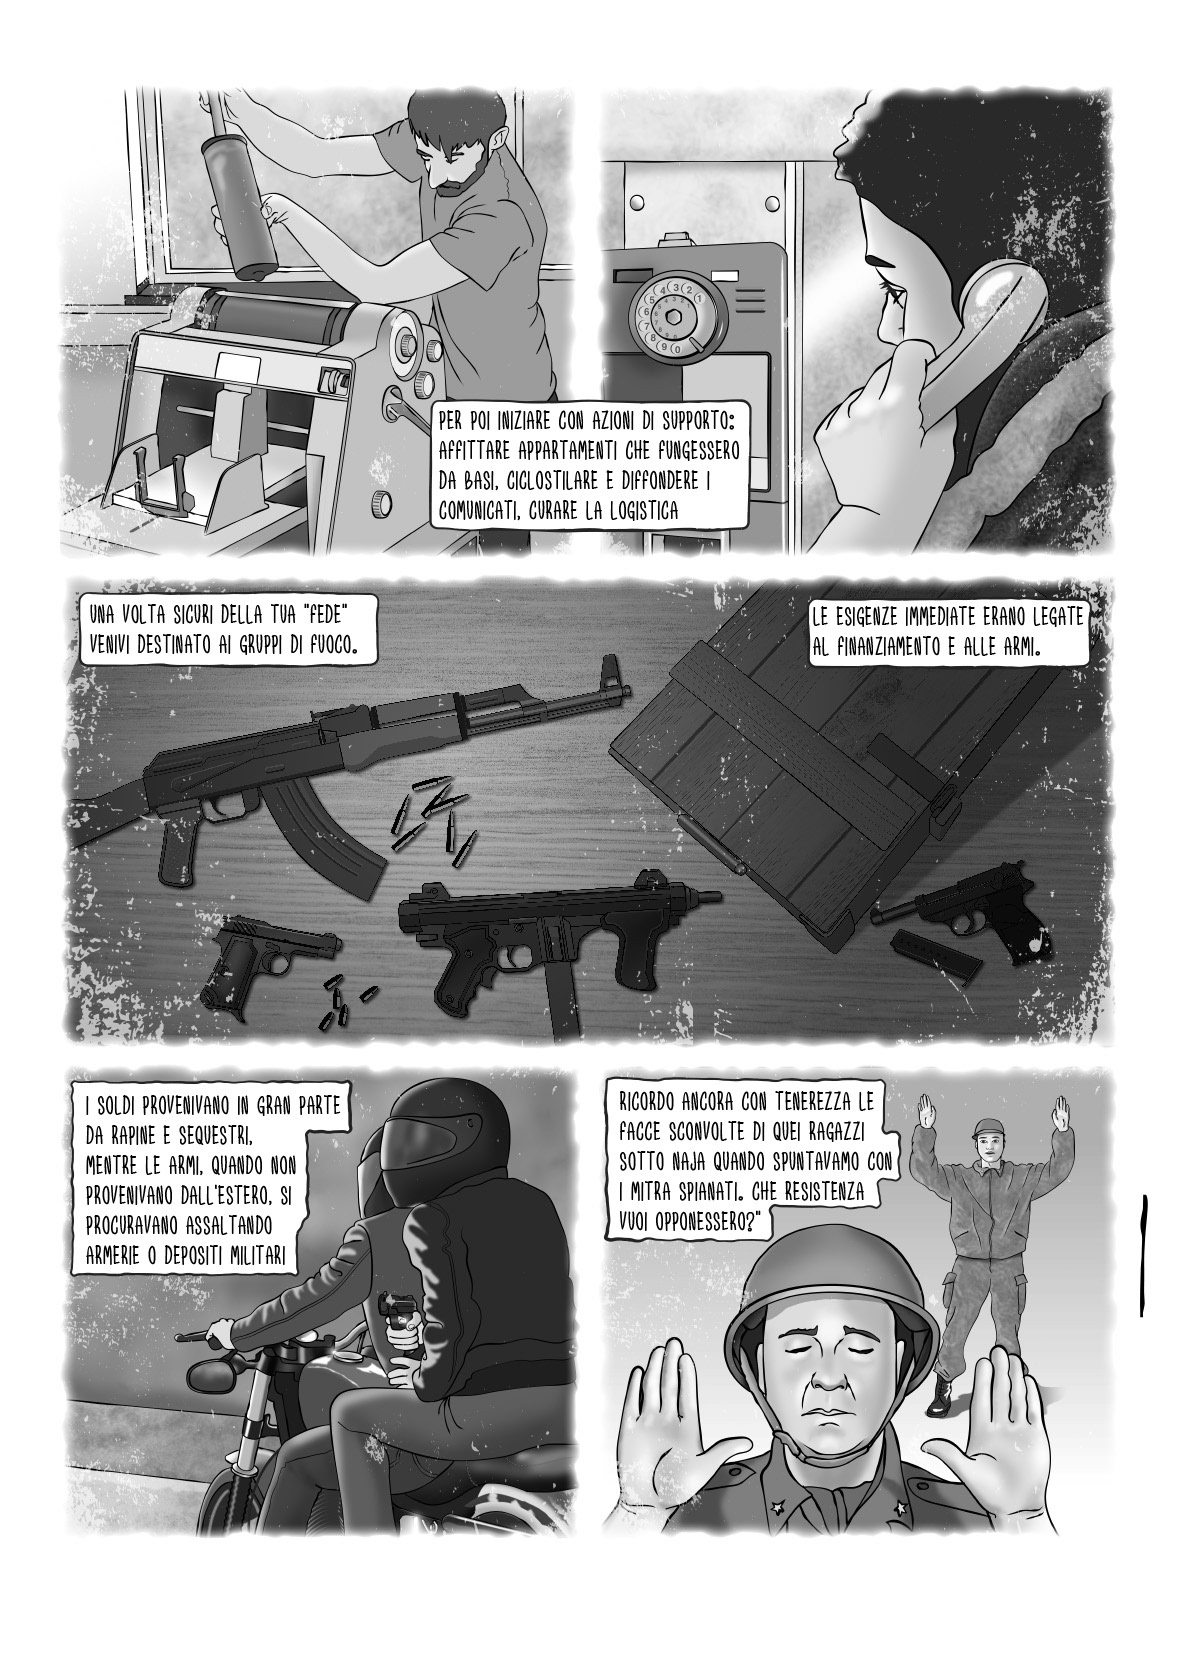 fumetto Graphic Novel terrorismo italia seventies anni di piombo Antagonismo neofascismo P38 poliziesco